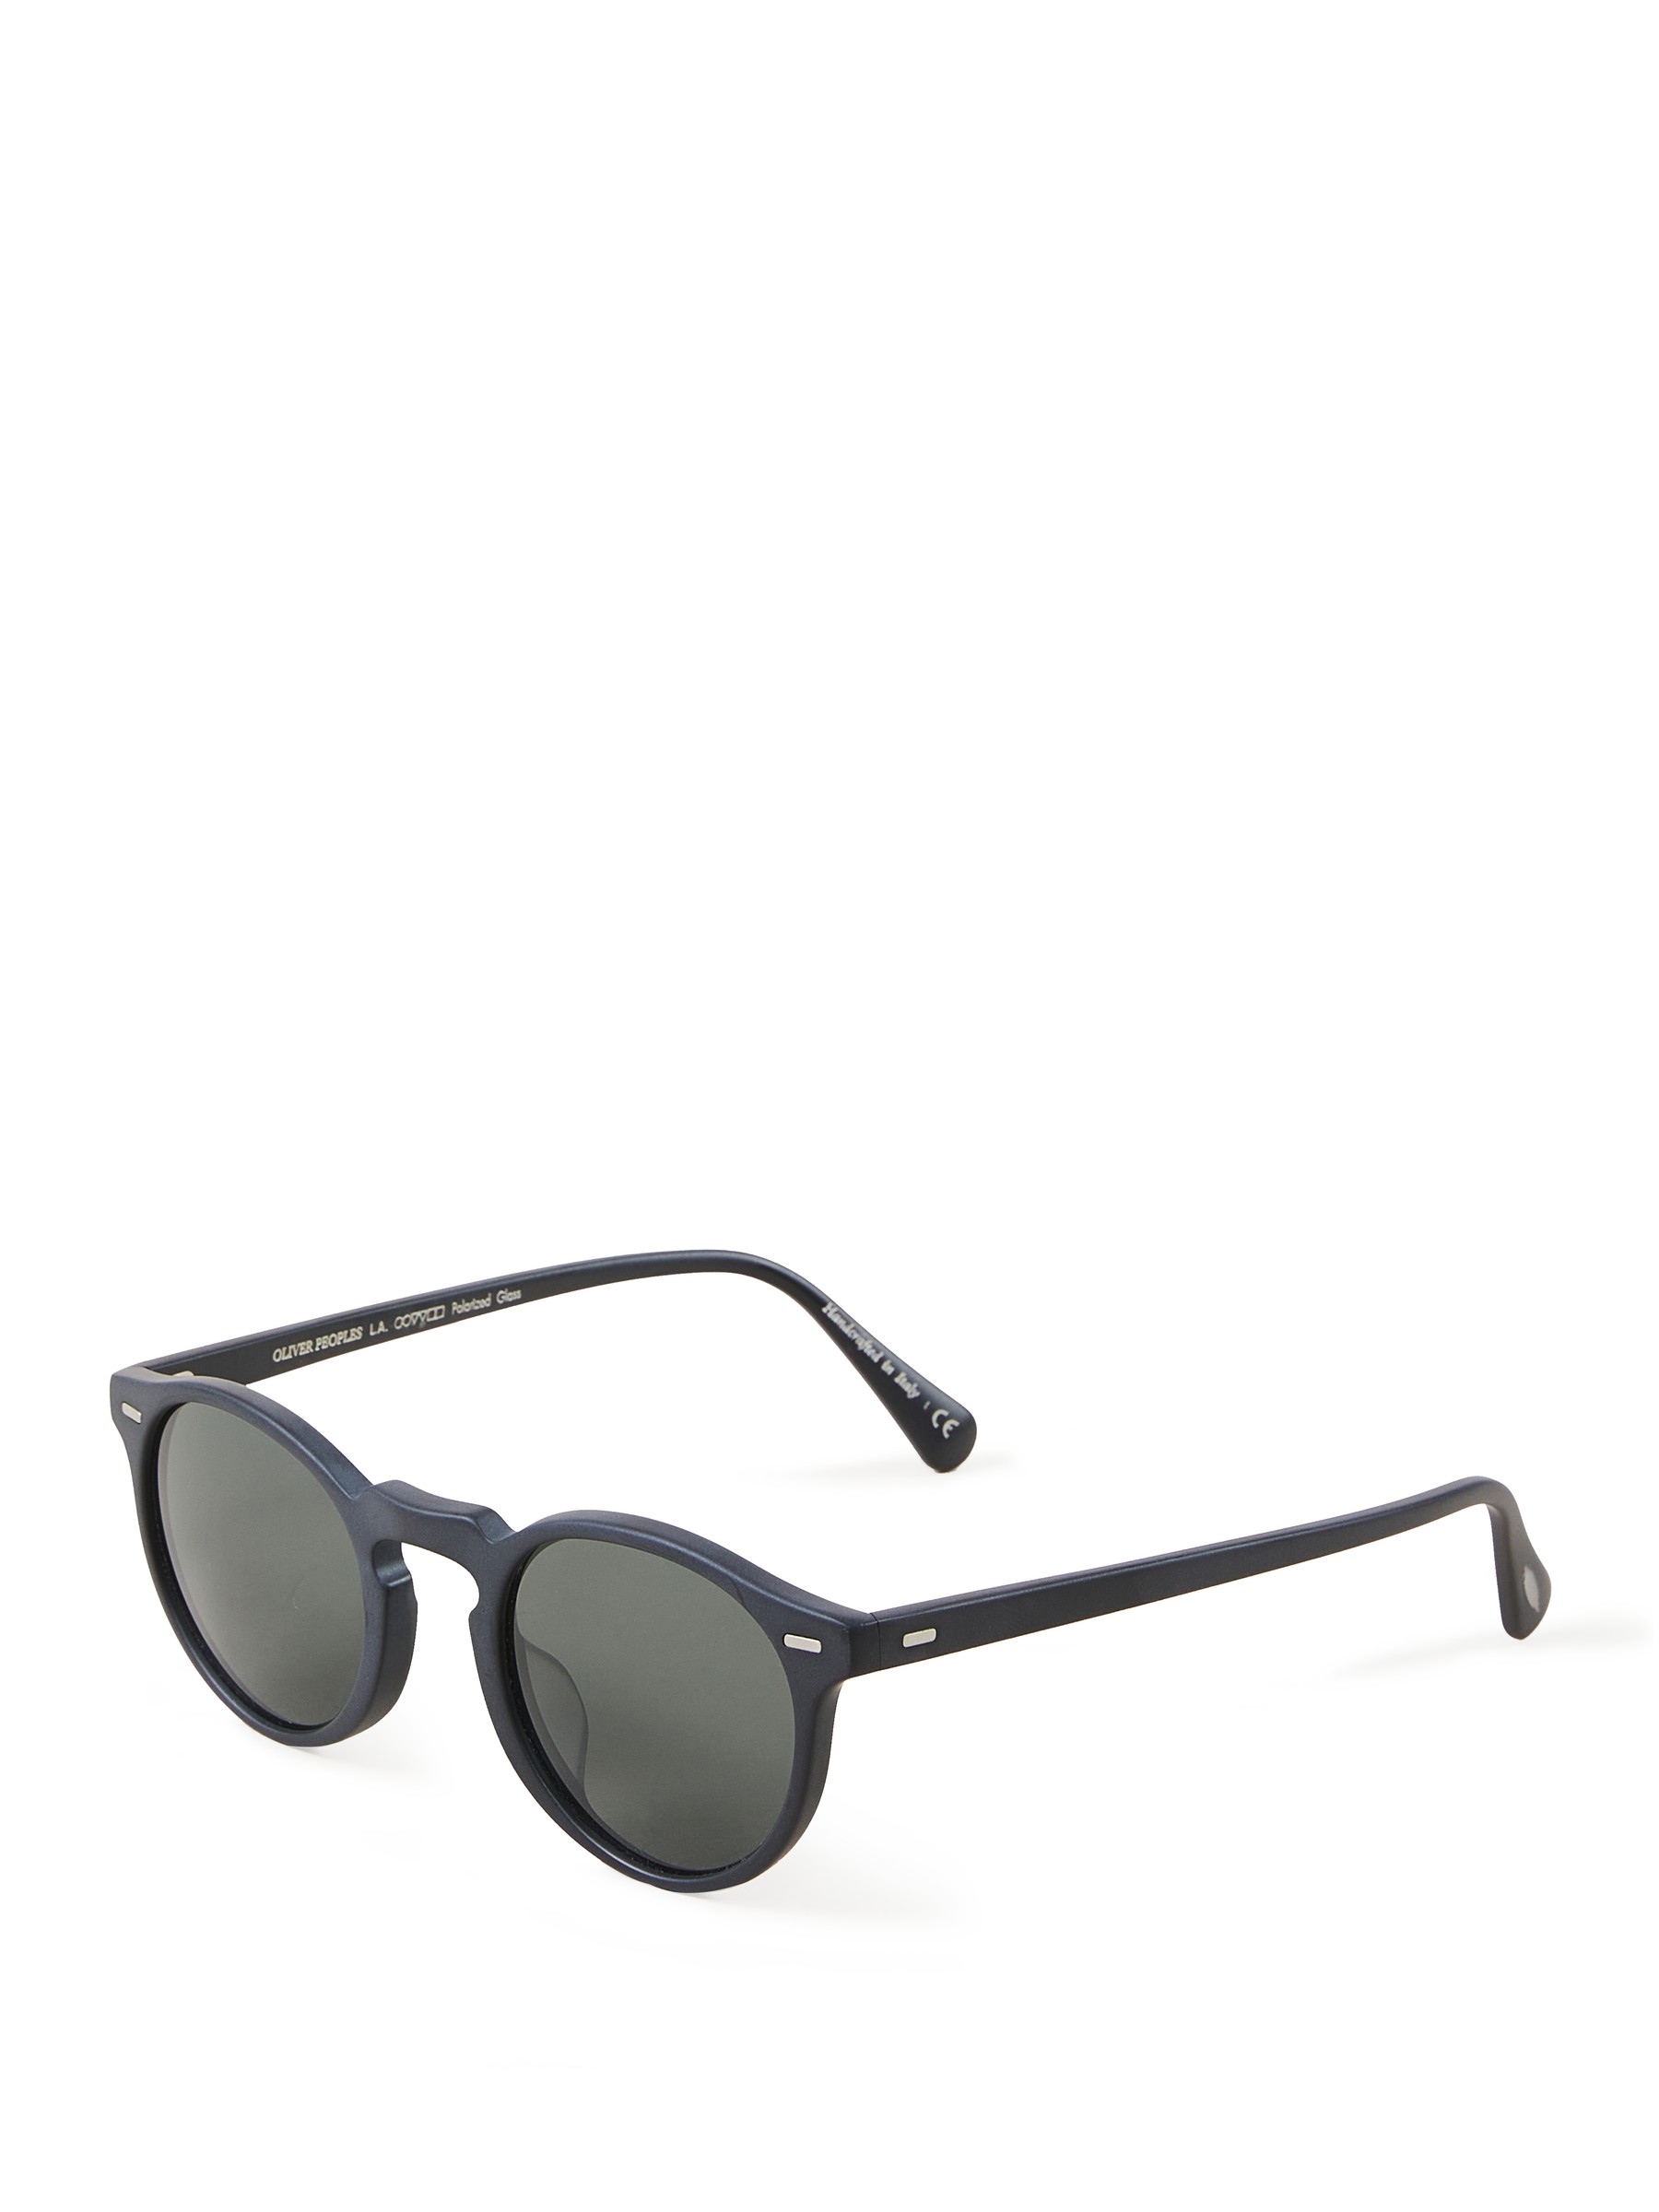 Oliver Peoples Sunglasses 'Gregory Peck' Black | Sunglasses